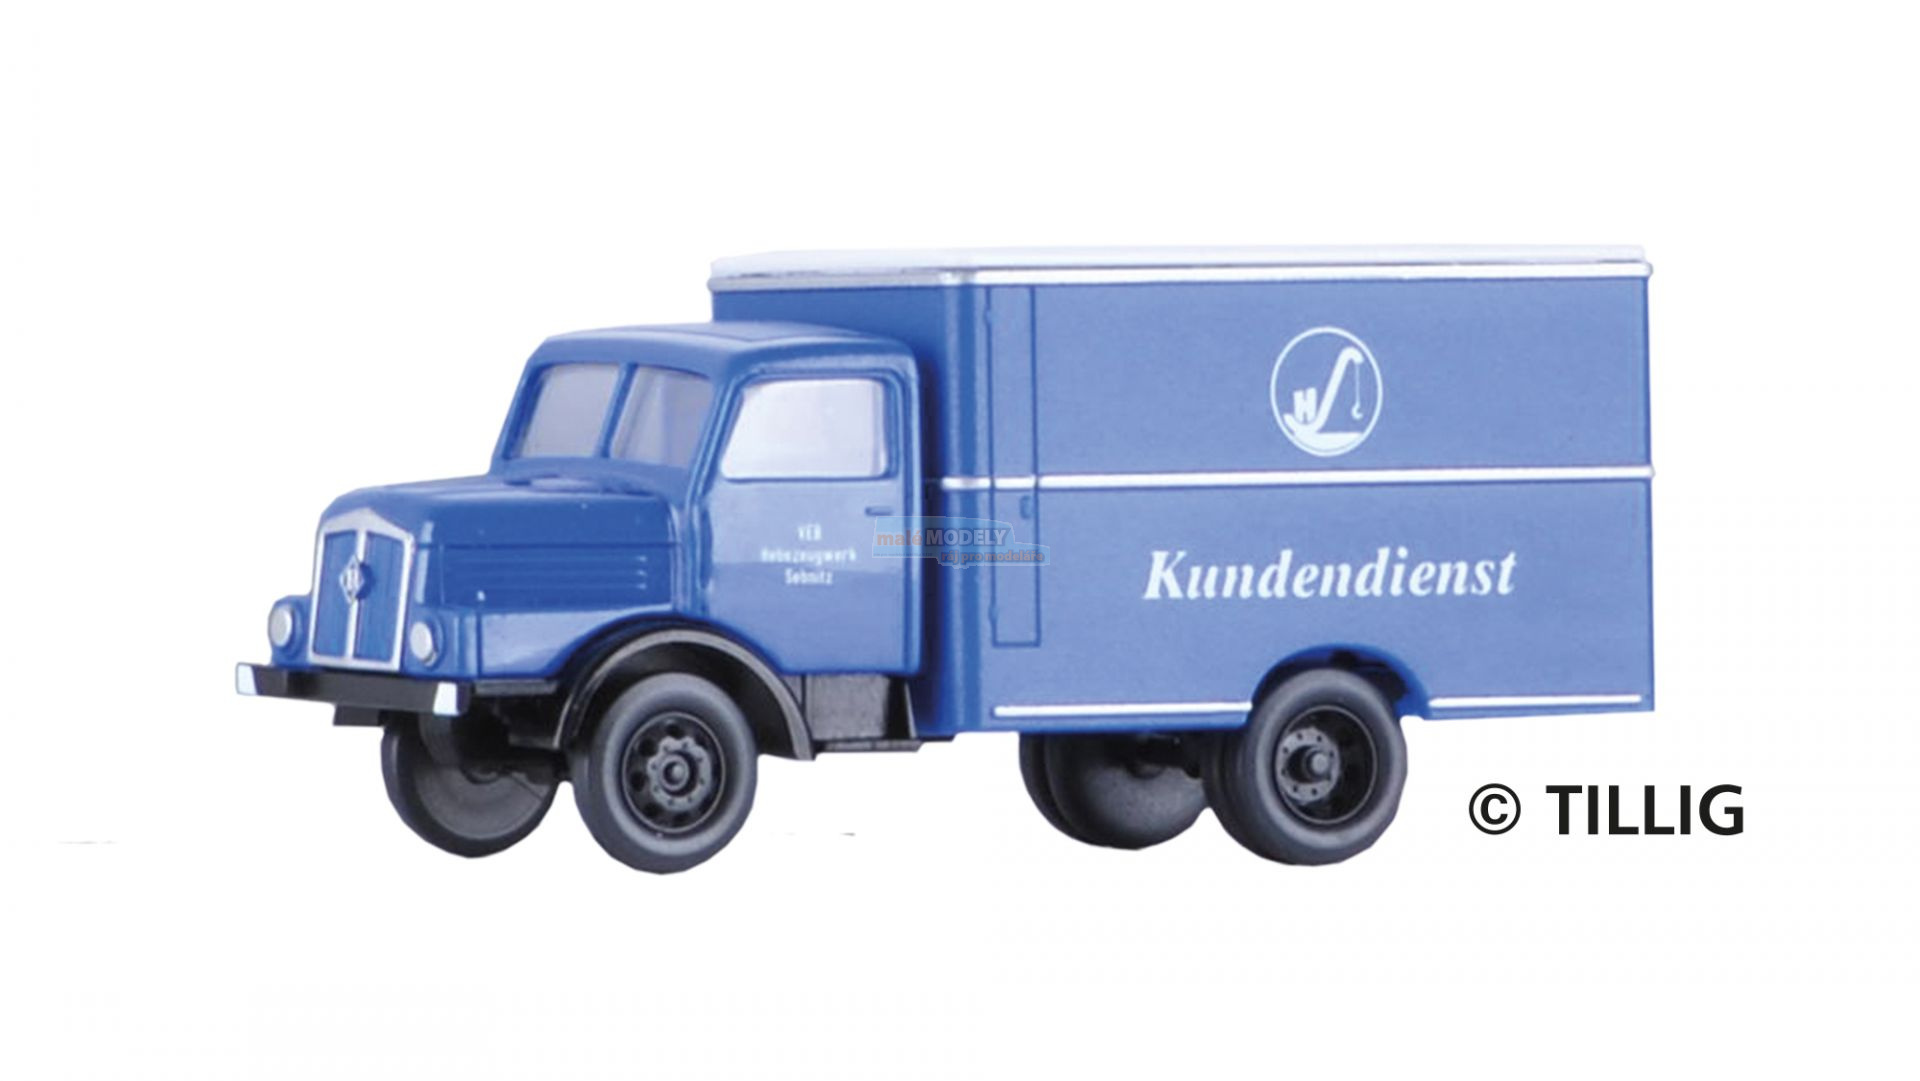 Nákladní automobil LKW H3A <b>Kundendienst</b>, Galeriemodell